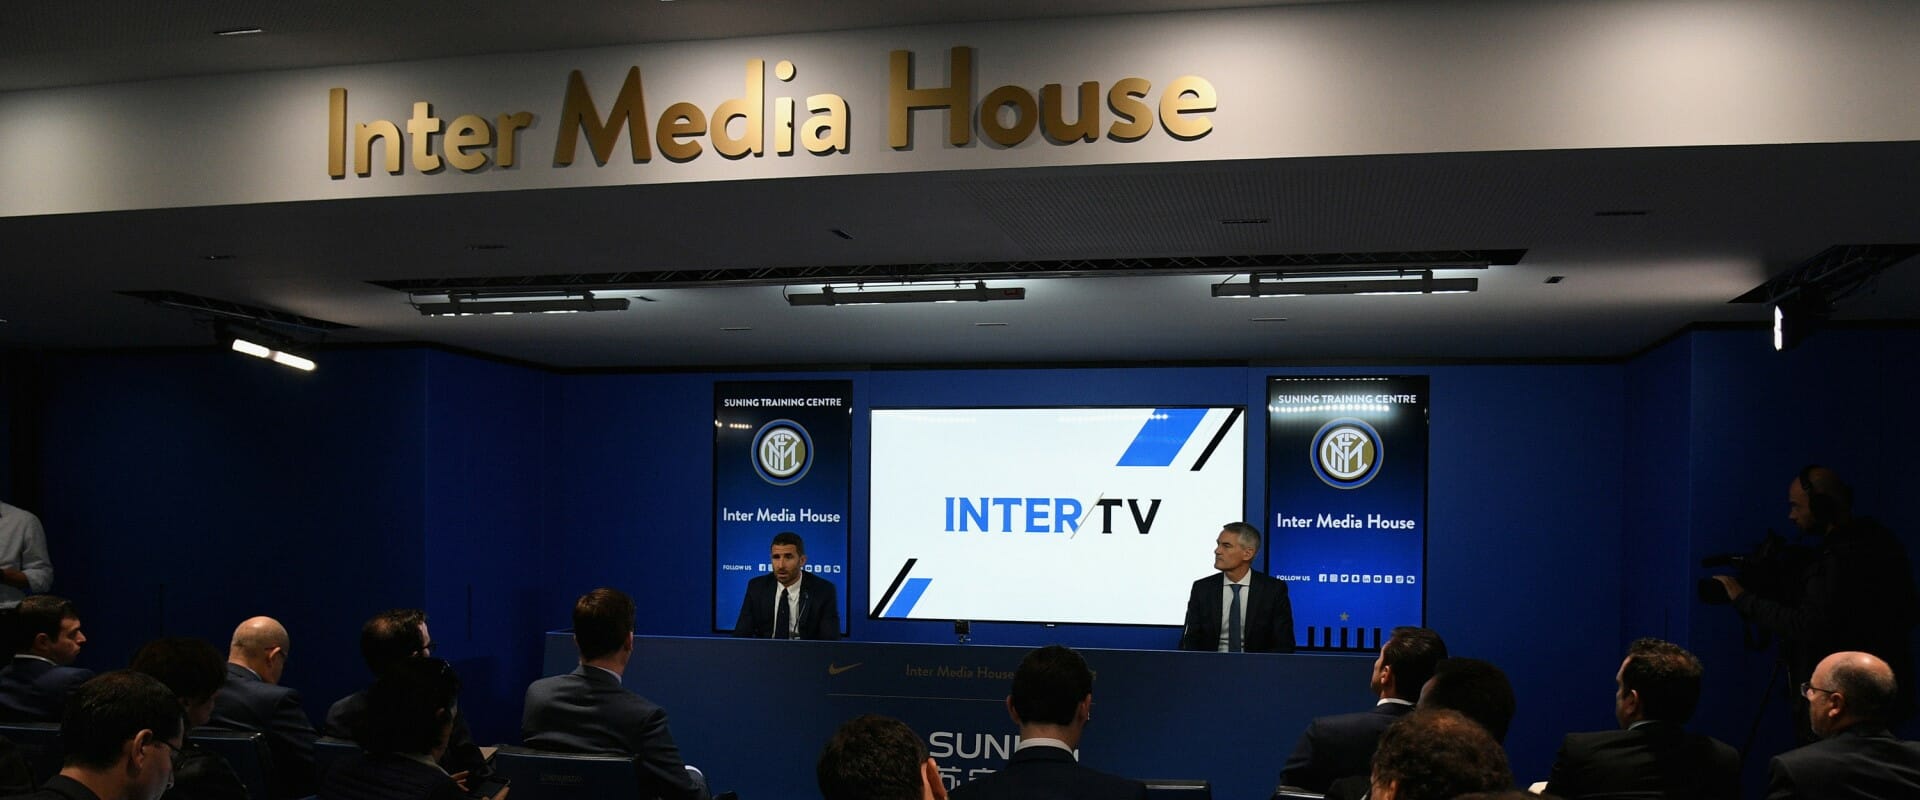 Inter Media House